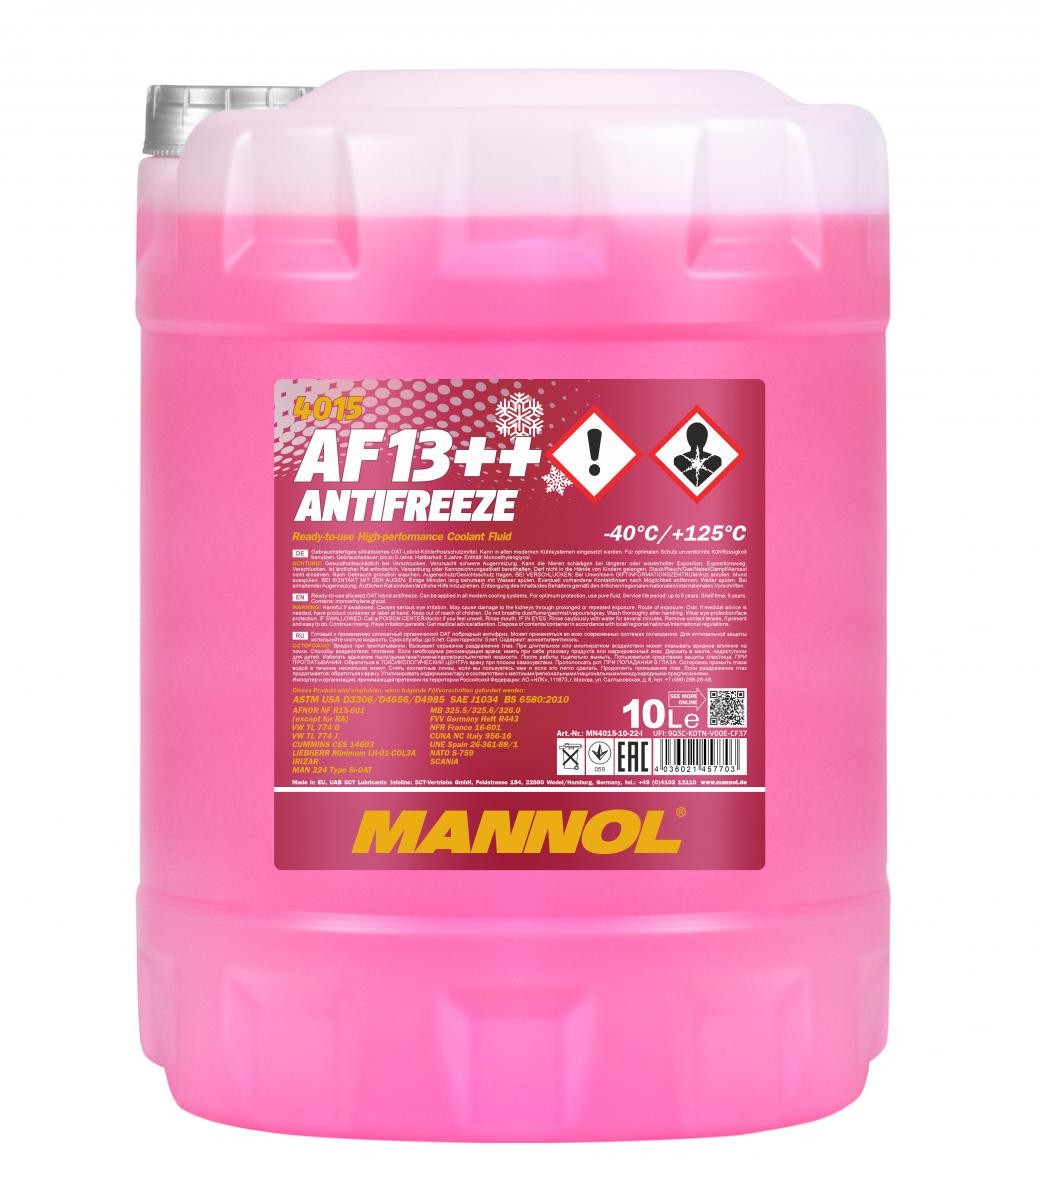 MANNOL AF13++, High-performance Coolant fluid MN4015-10